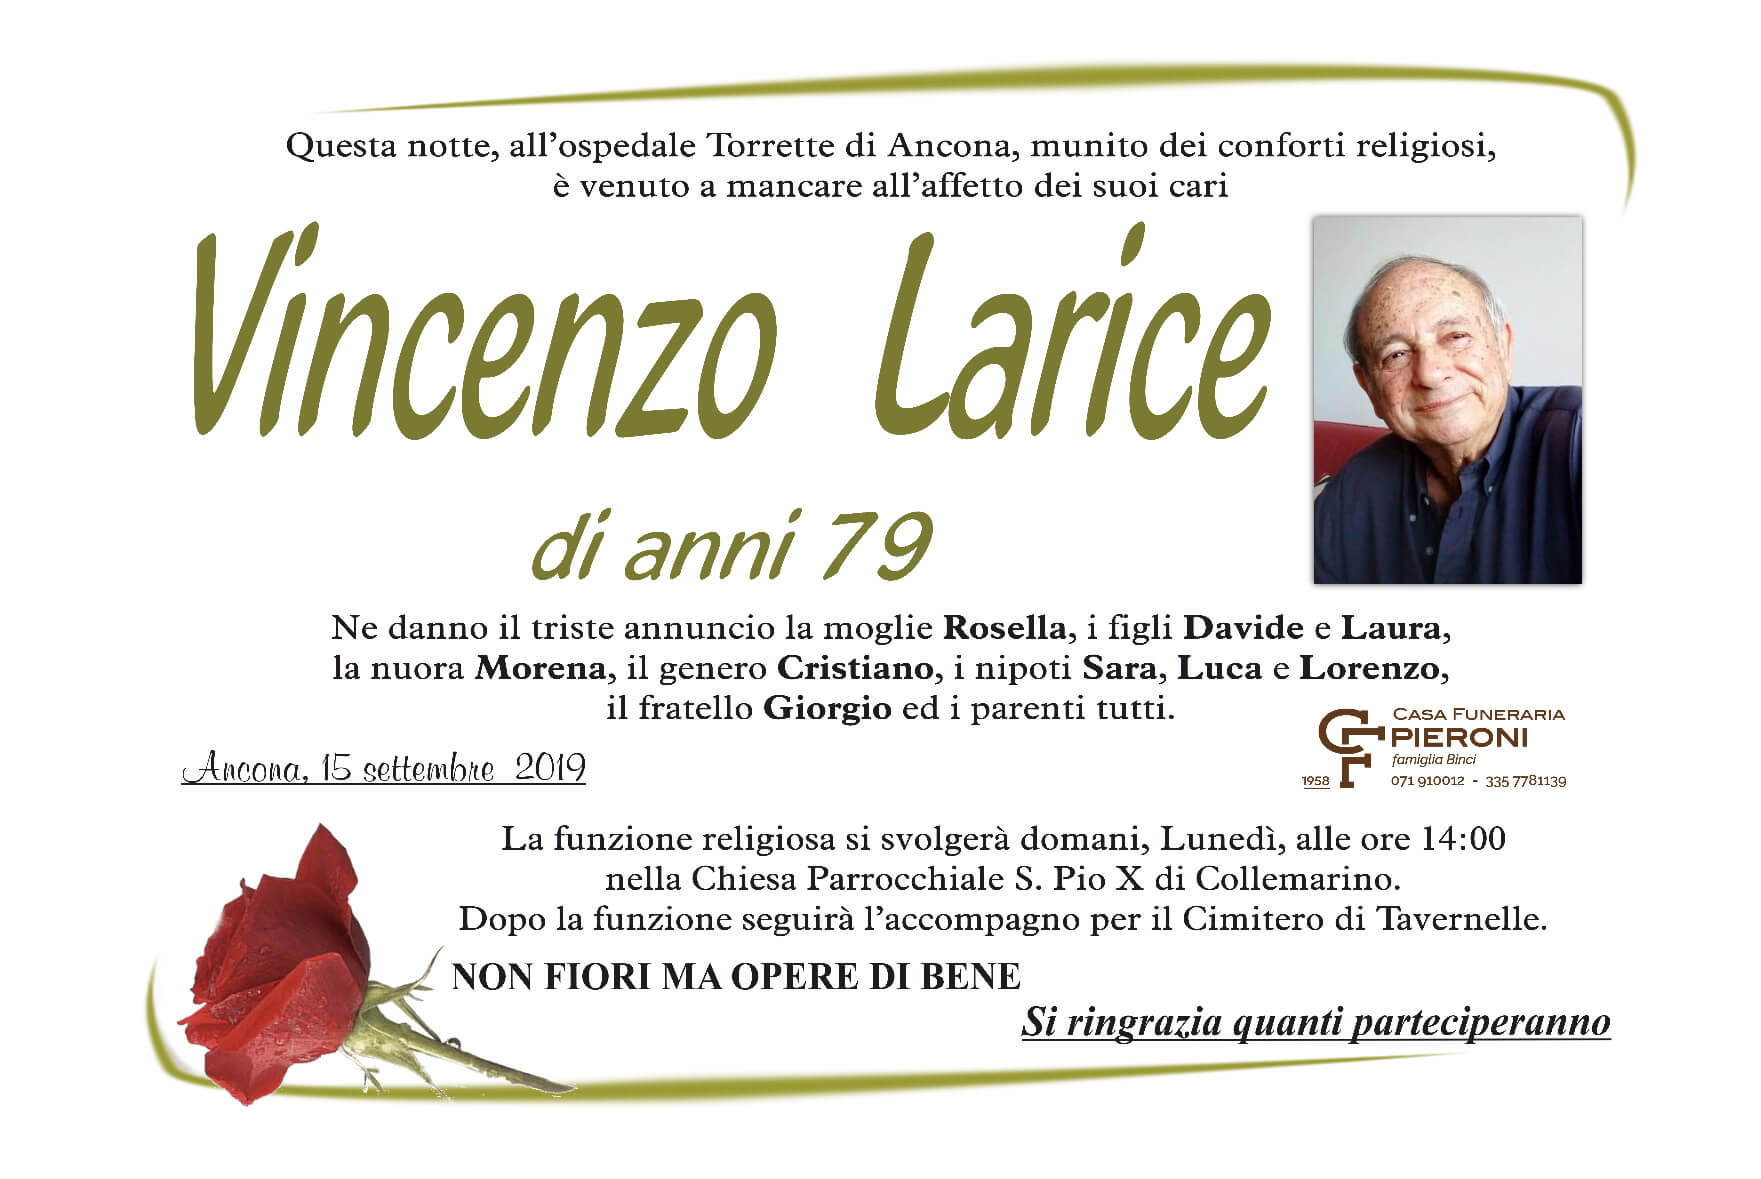 Vincenzo Larice